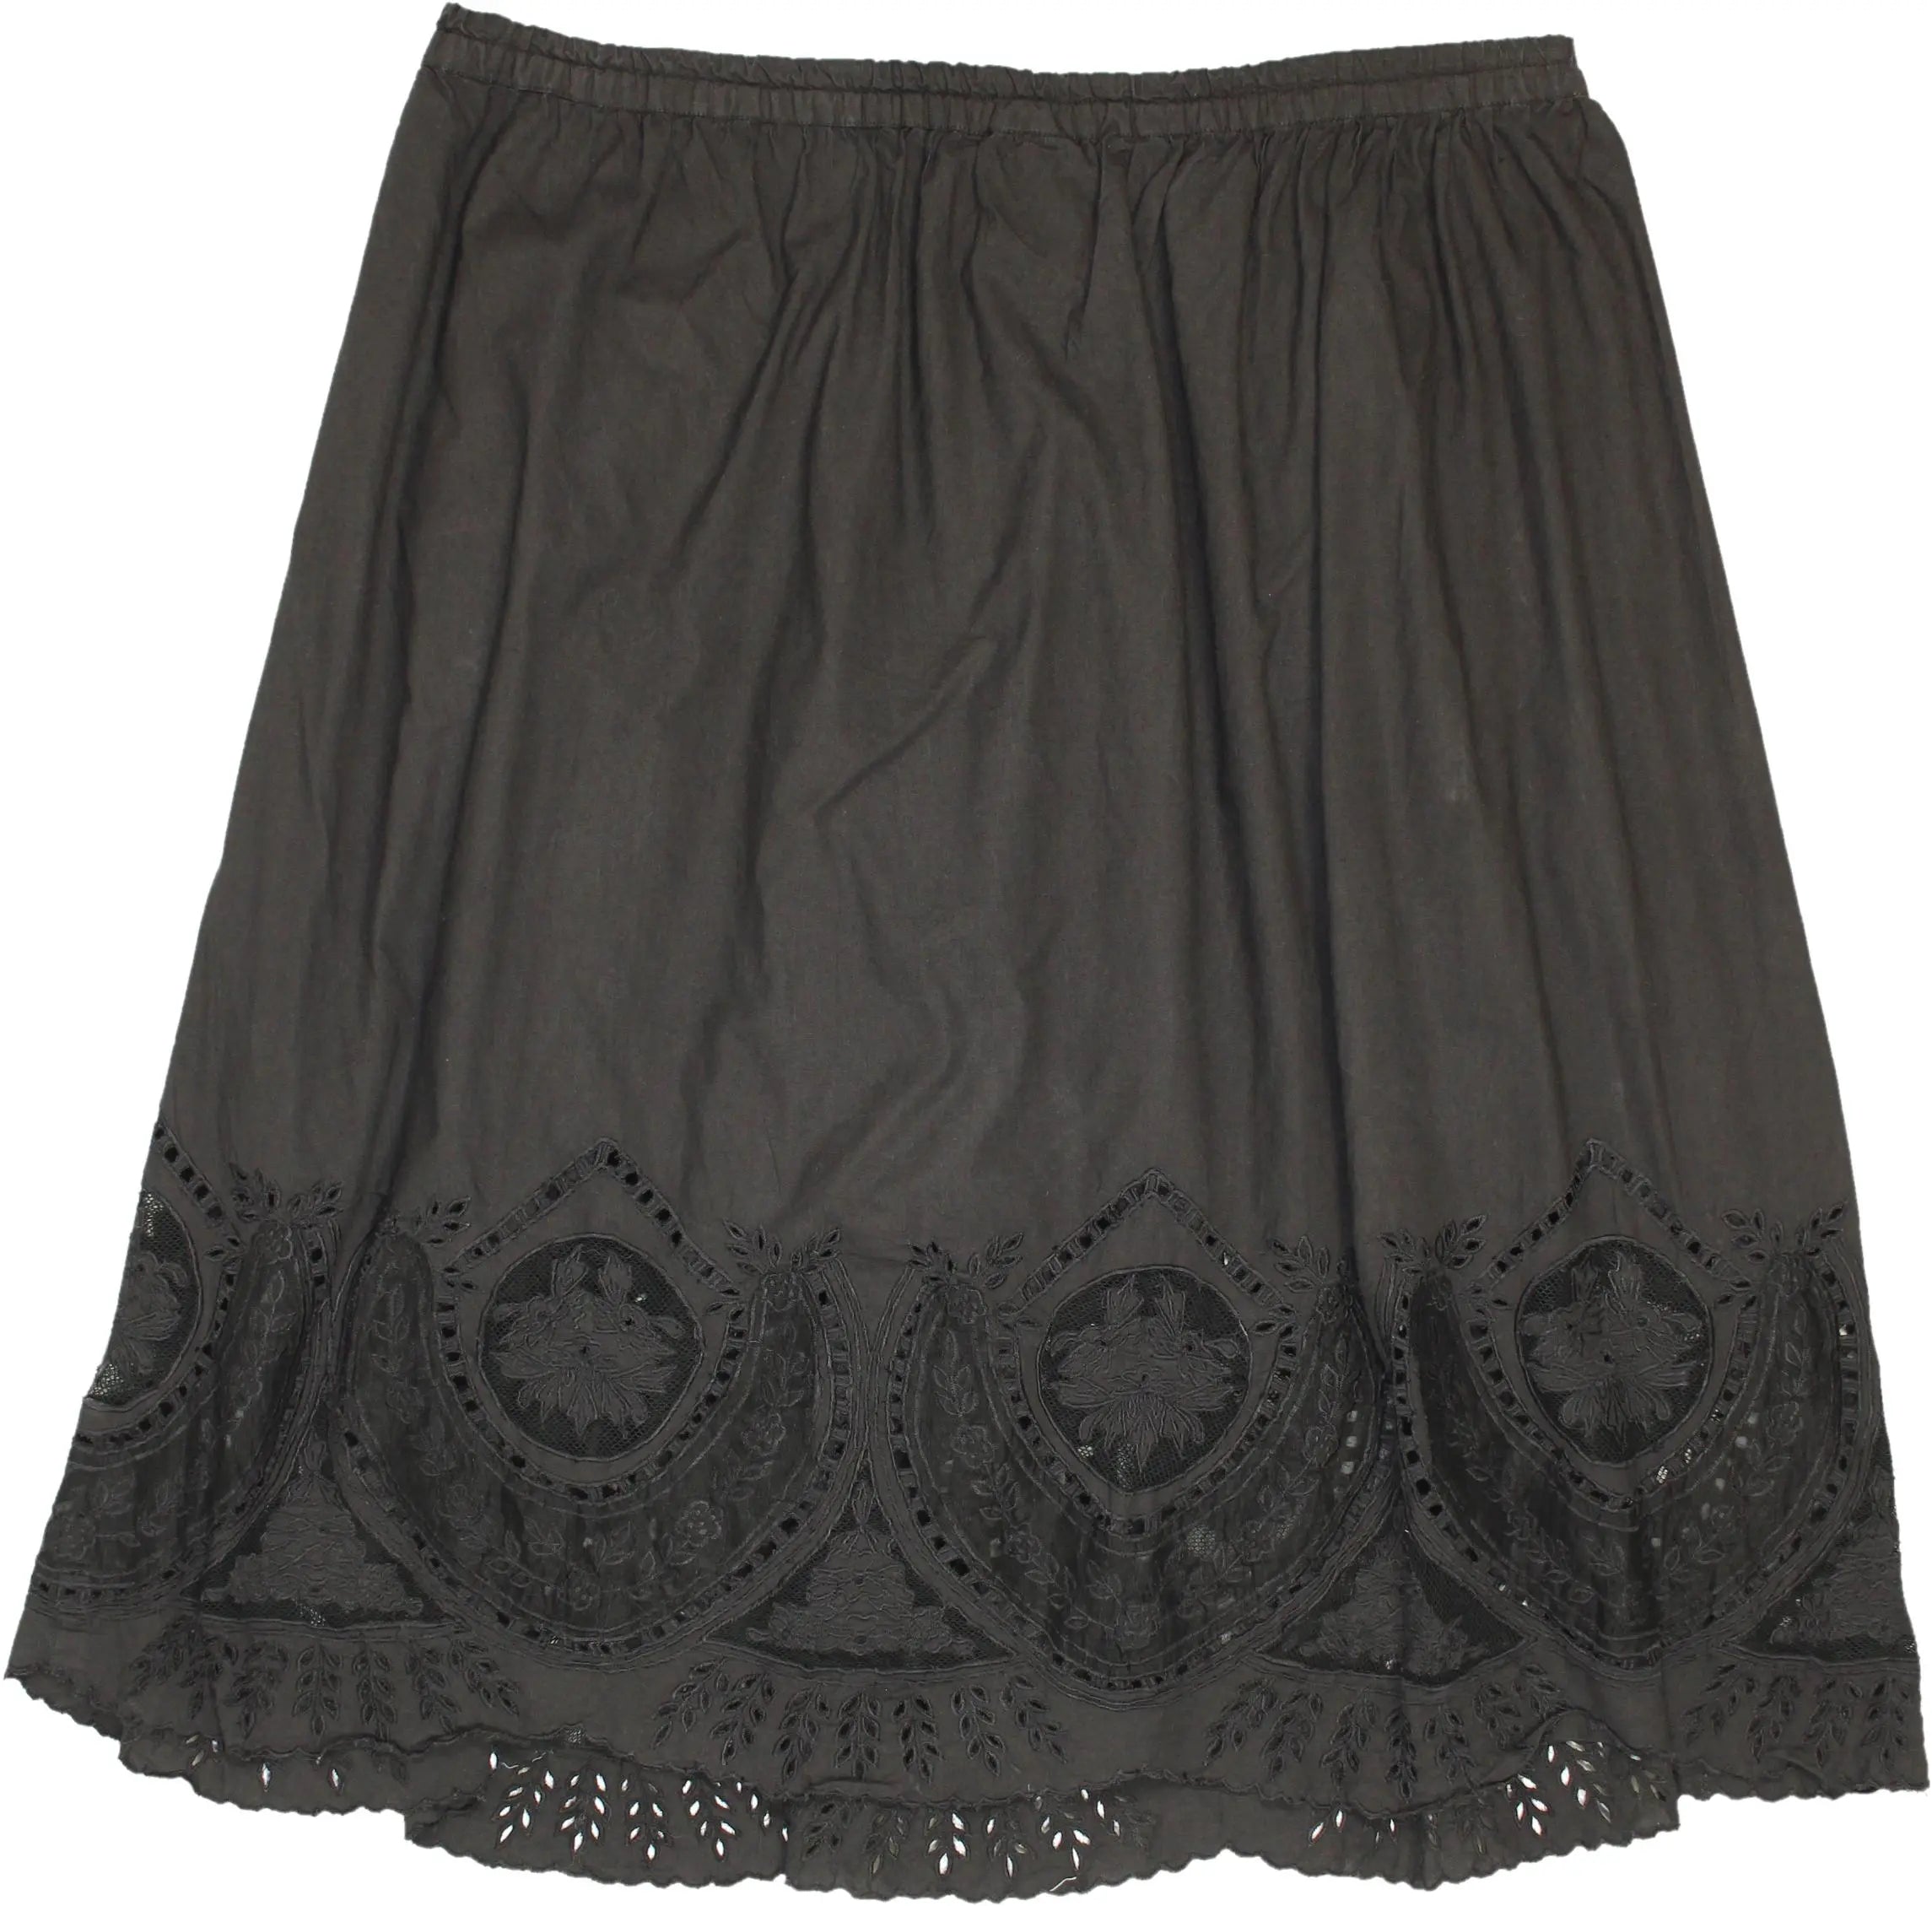 Nauwkraft - Midi Skirt- ThriftTale.com - Vintage and second handclothing